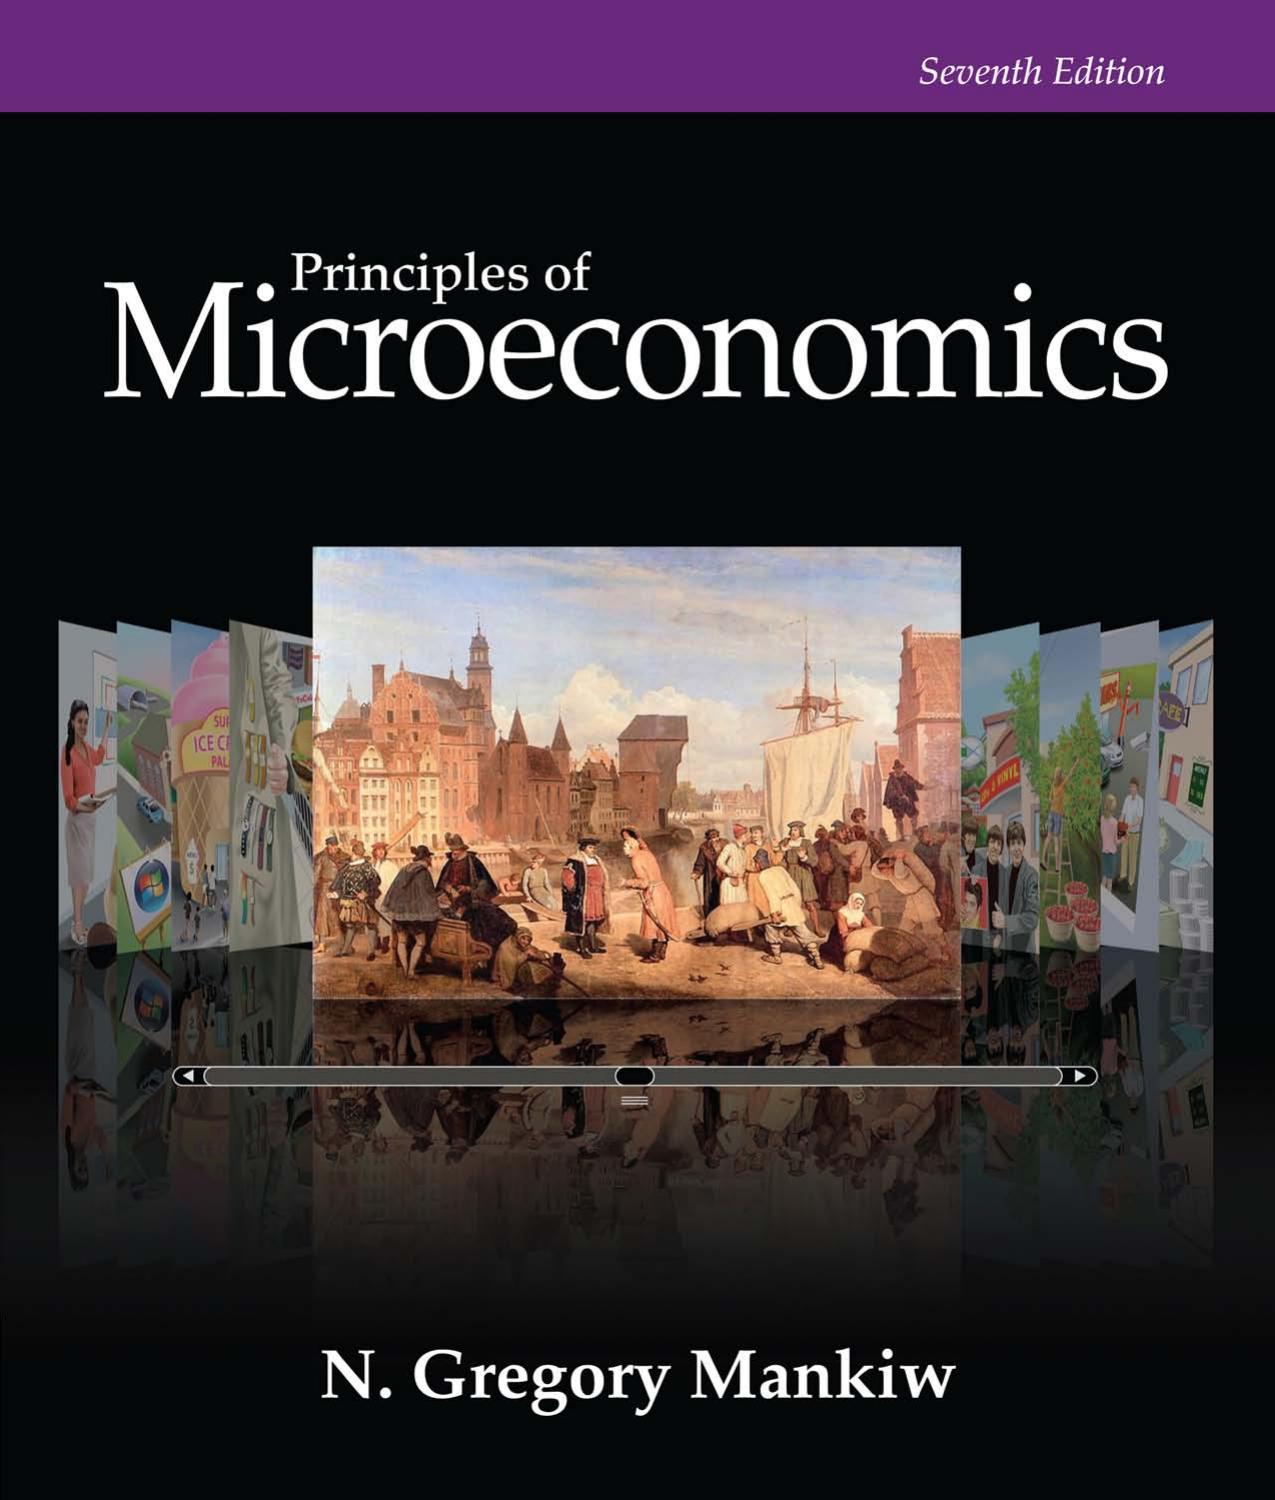 Principles of Microeconomics 7th Edition 2014